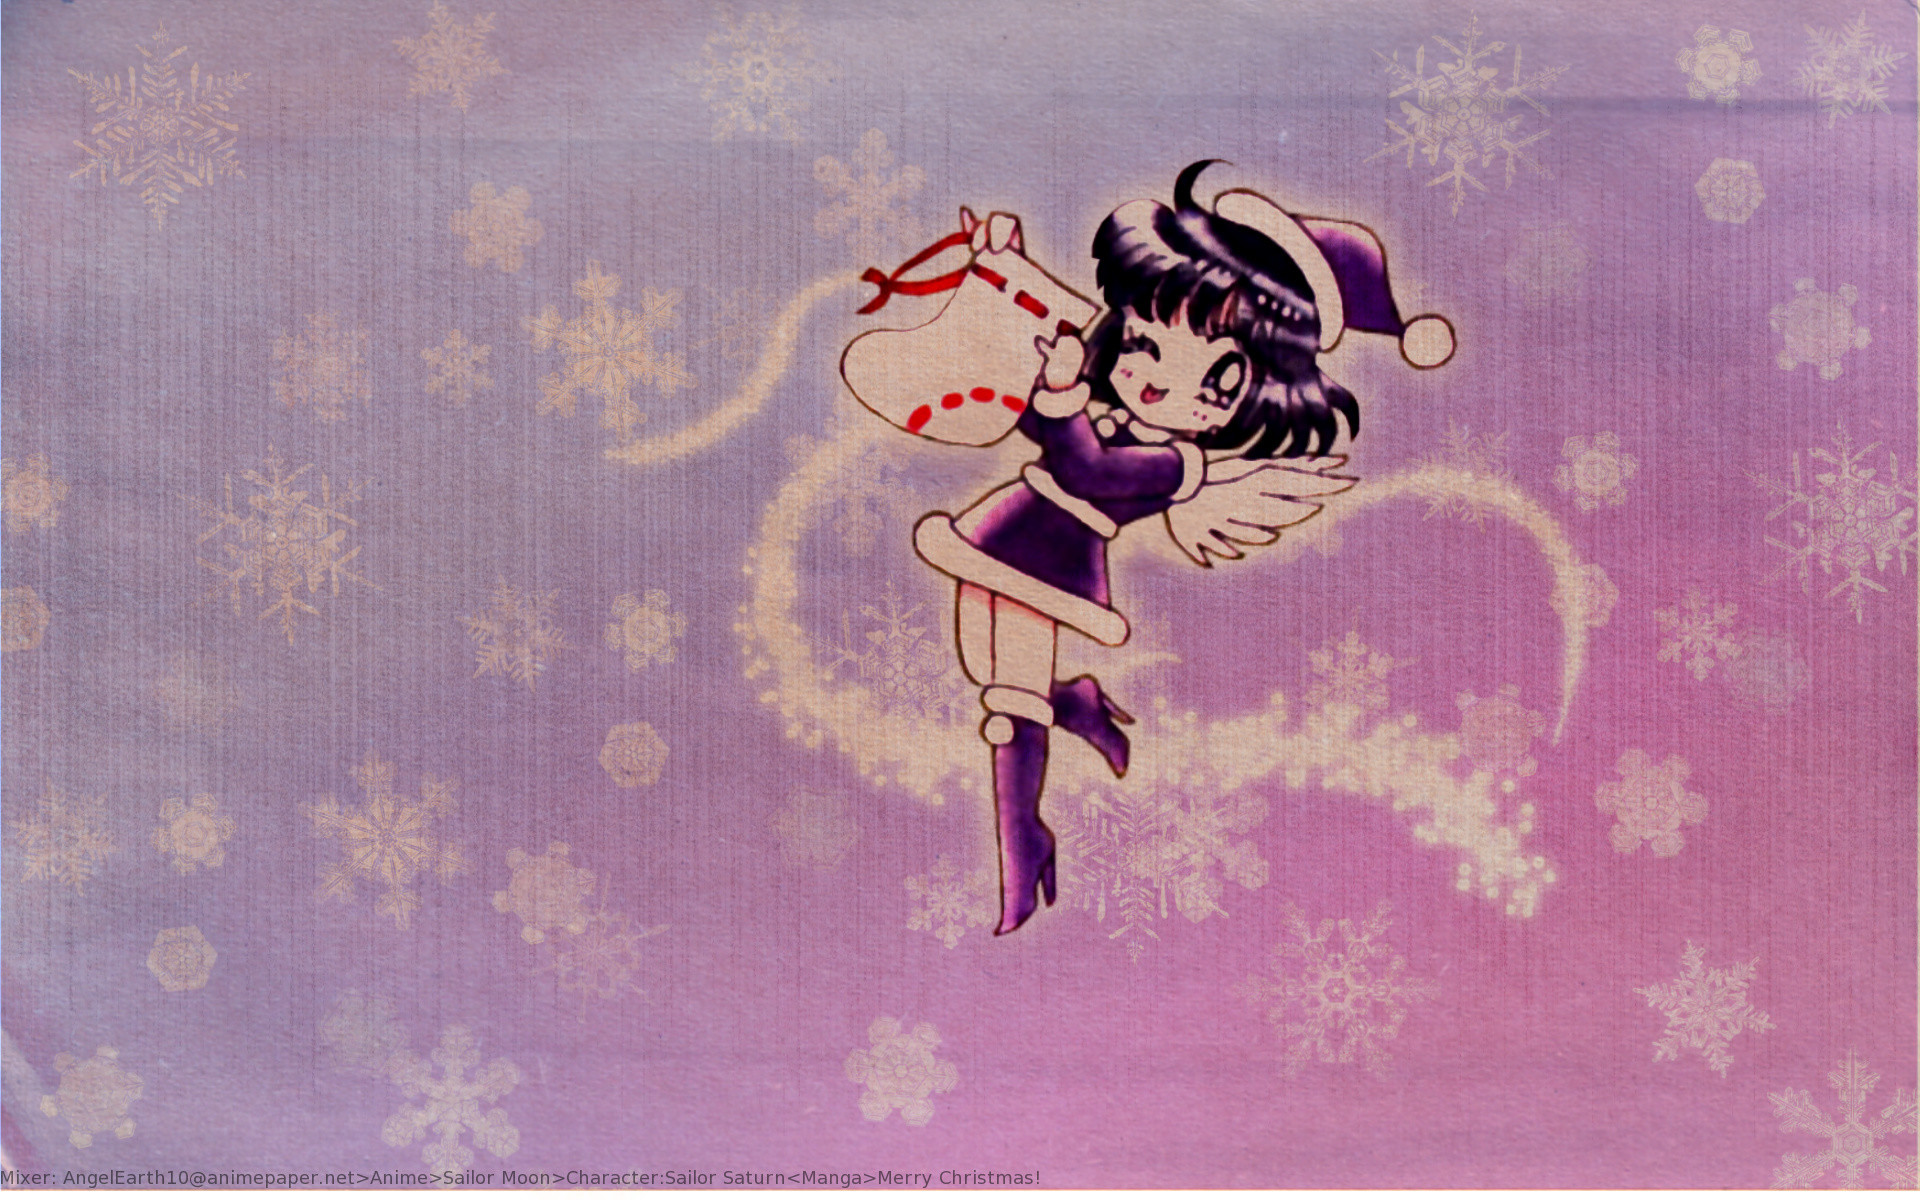 Sailor moon christmas wallpaper – photo . Play Free Flash Games Online at oGamesBoxcom